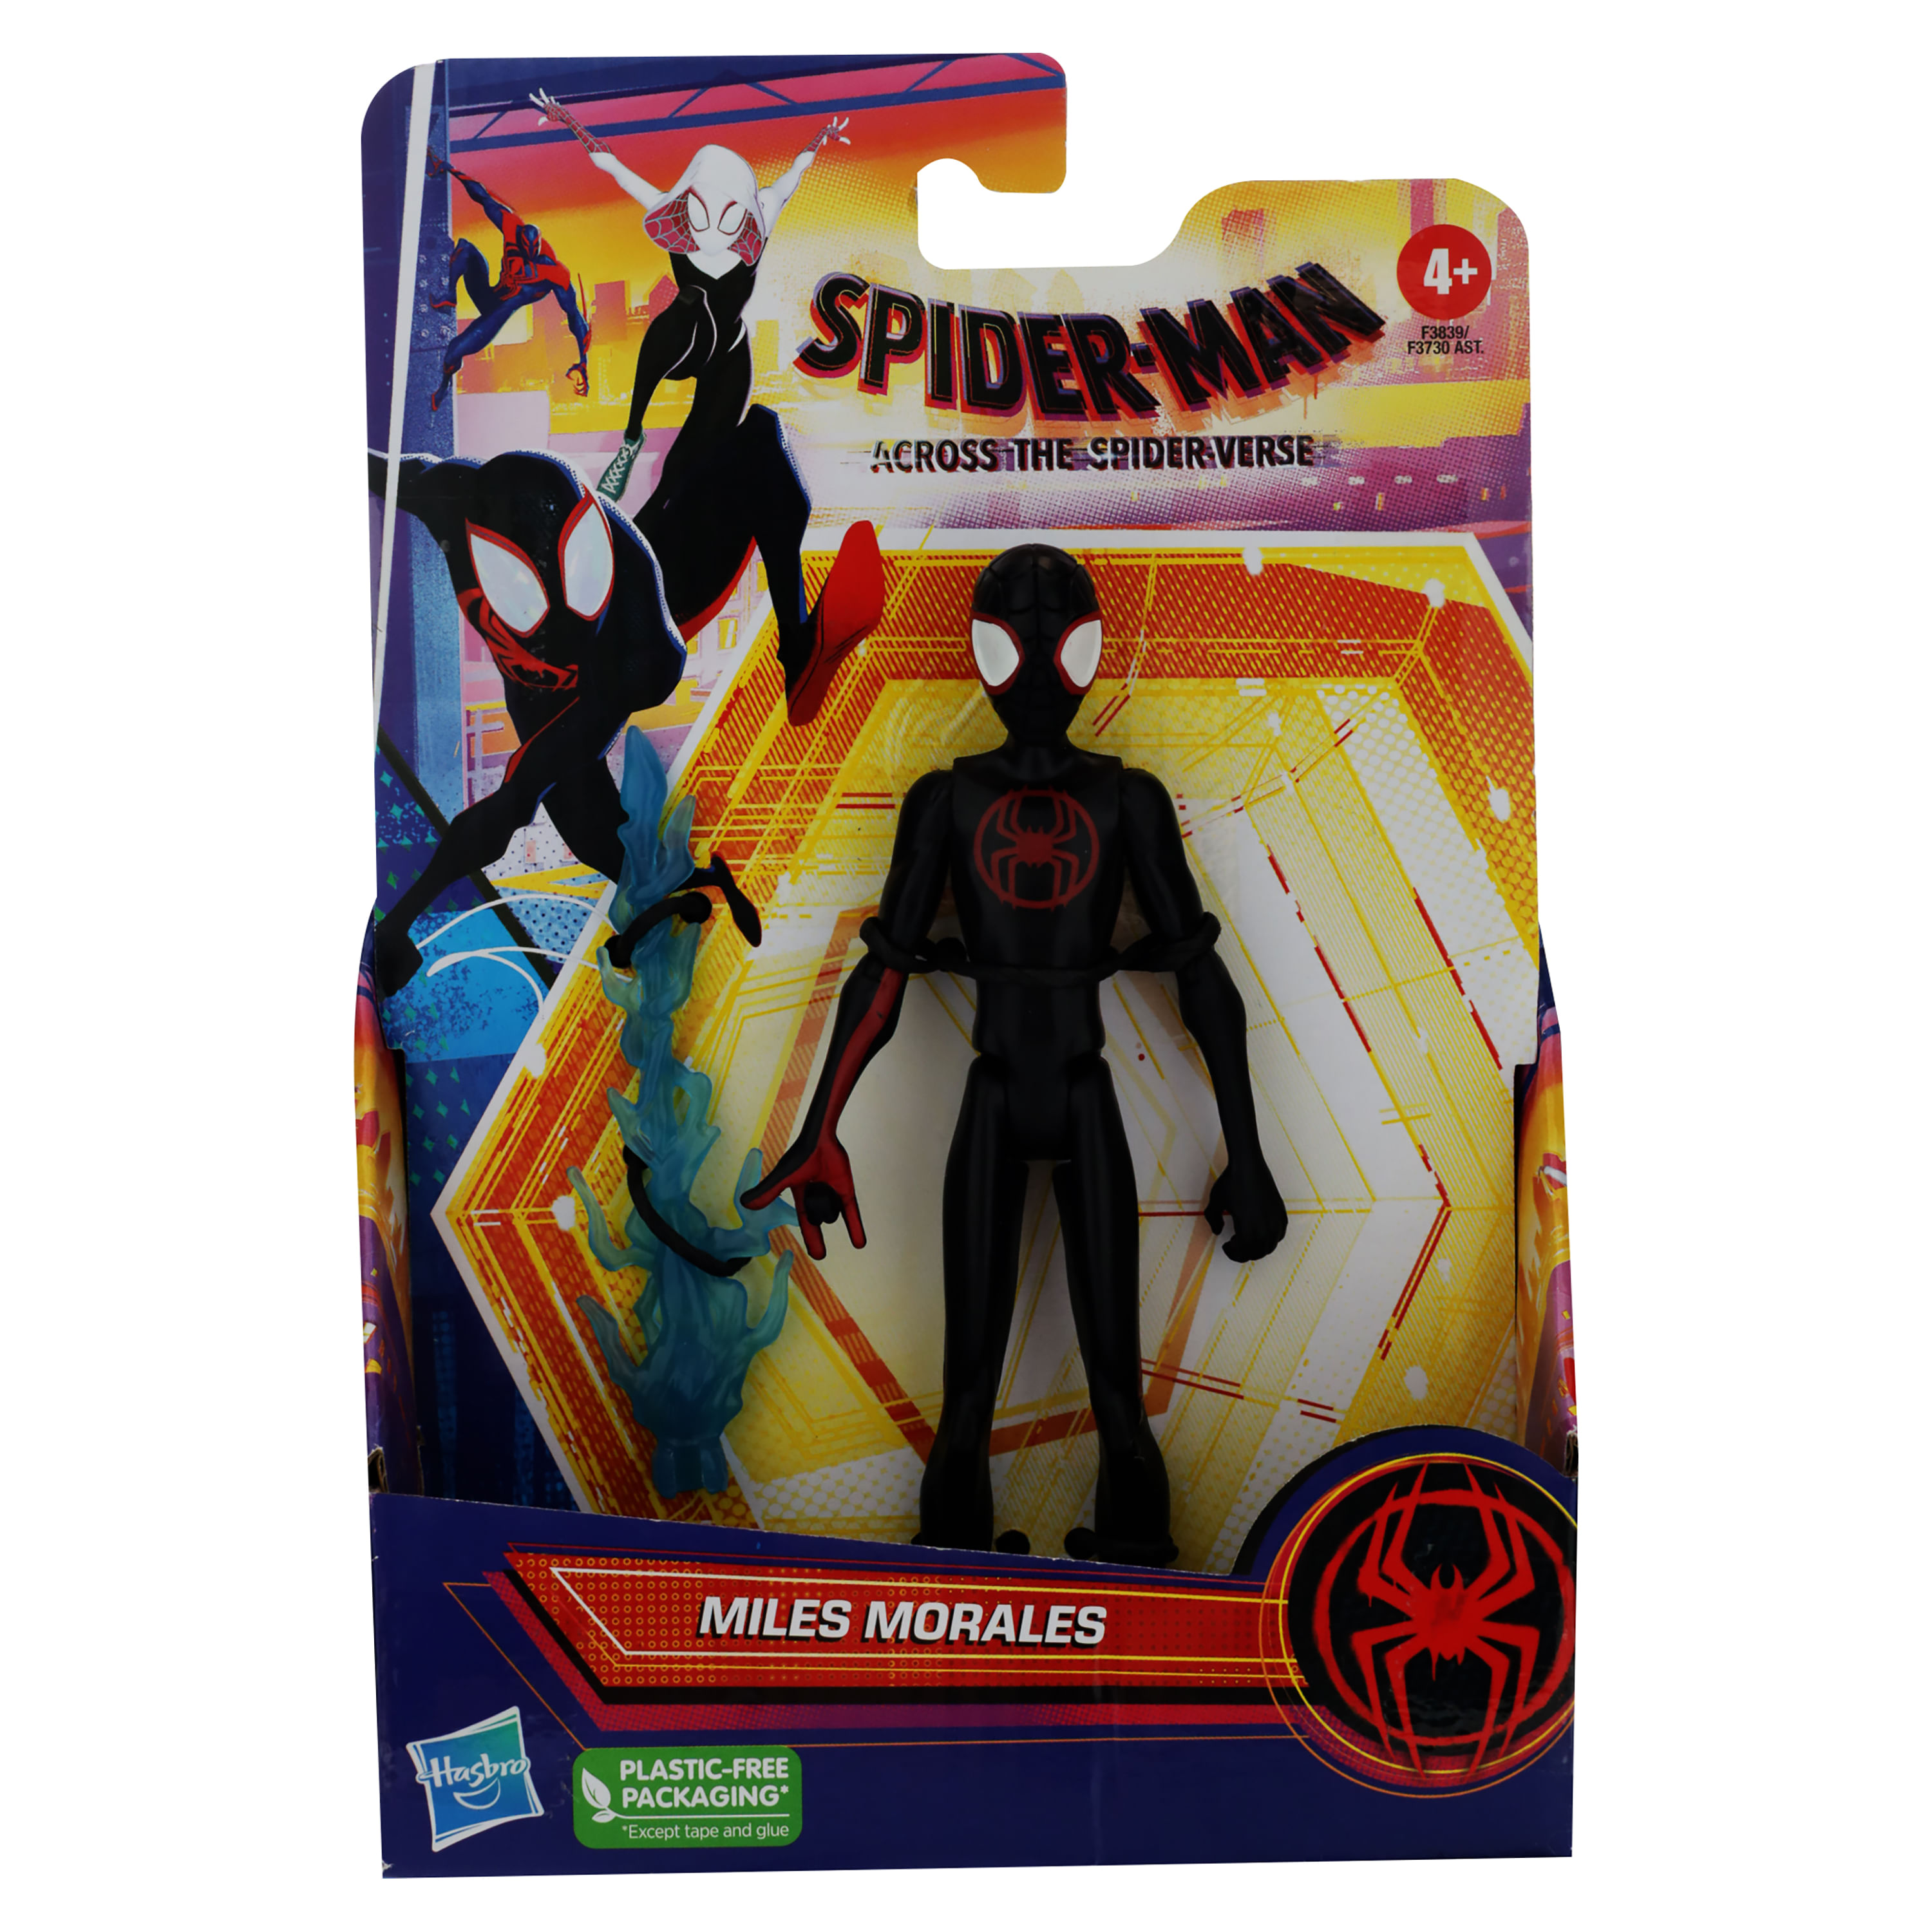 Comprar Juguete Marvel Spiderman Across The Spiderverse | Walmart Guatemala